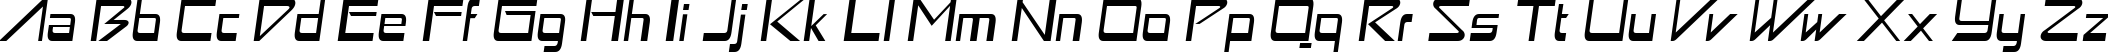 Пример написания английского алфавита шрифтом Astron Boy Italic